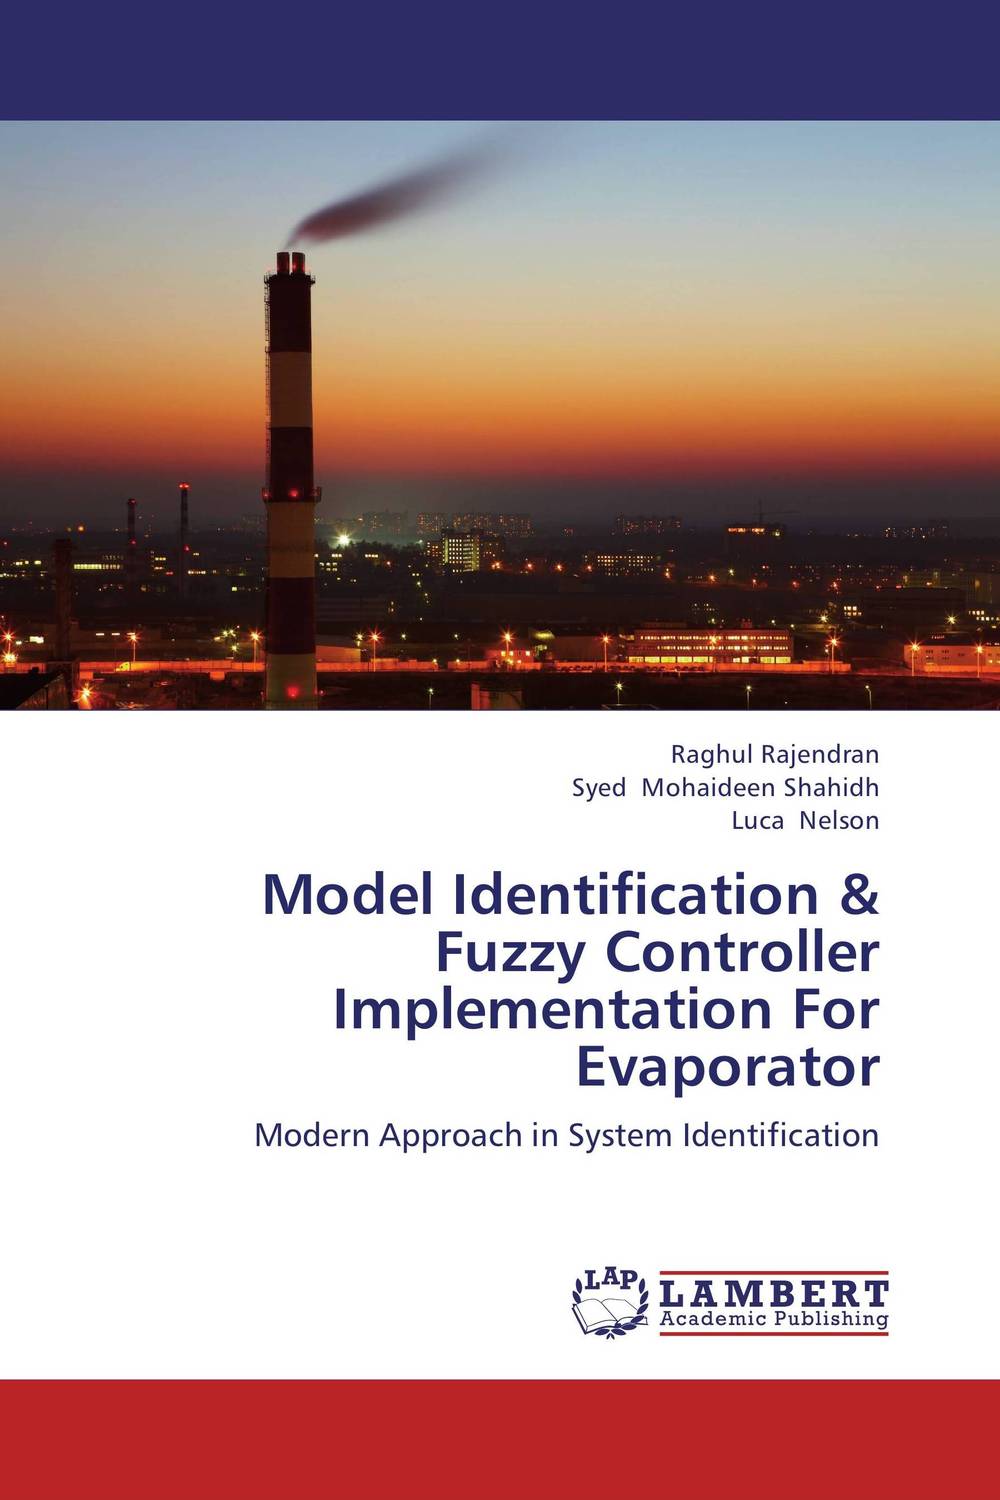 Model Identification & Fuzzy Controller Implementation For Evaporator